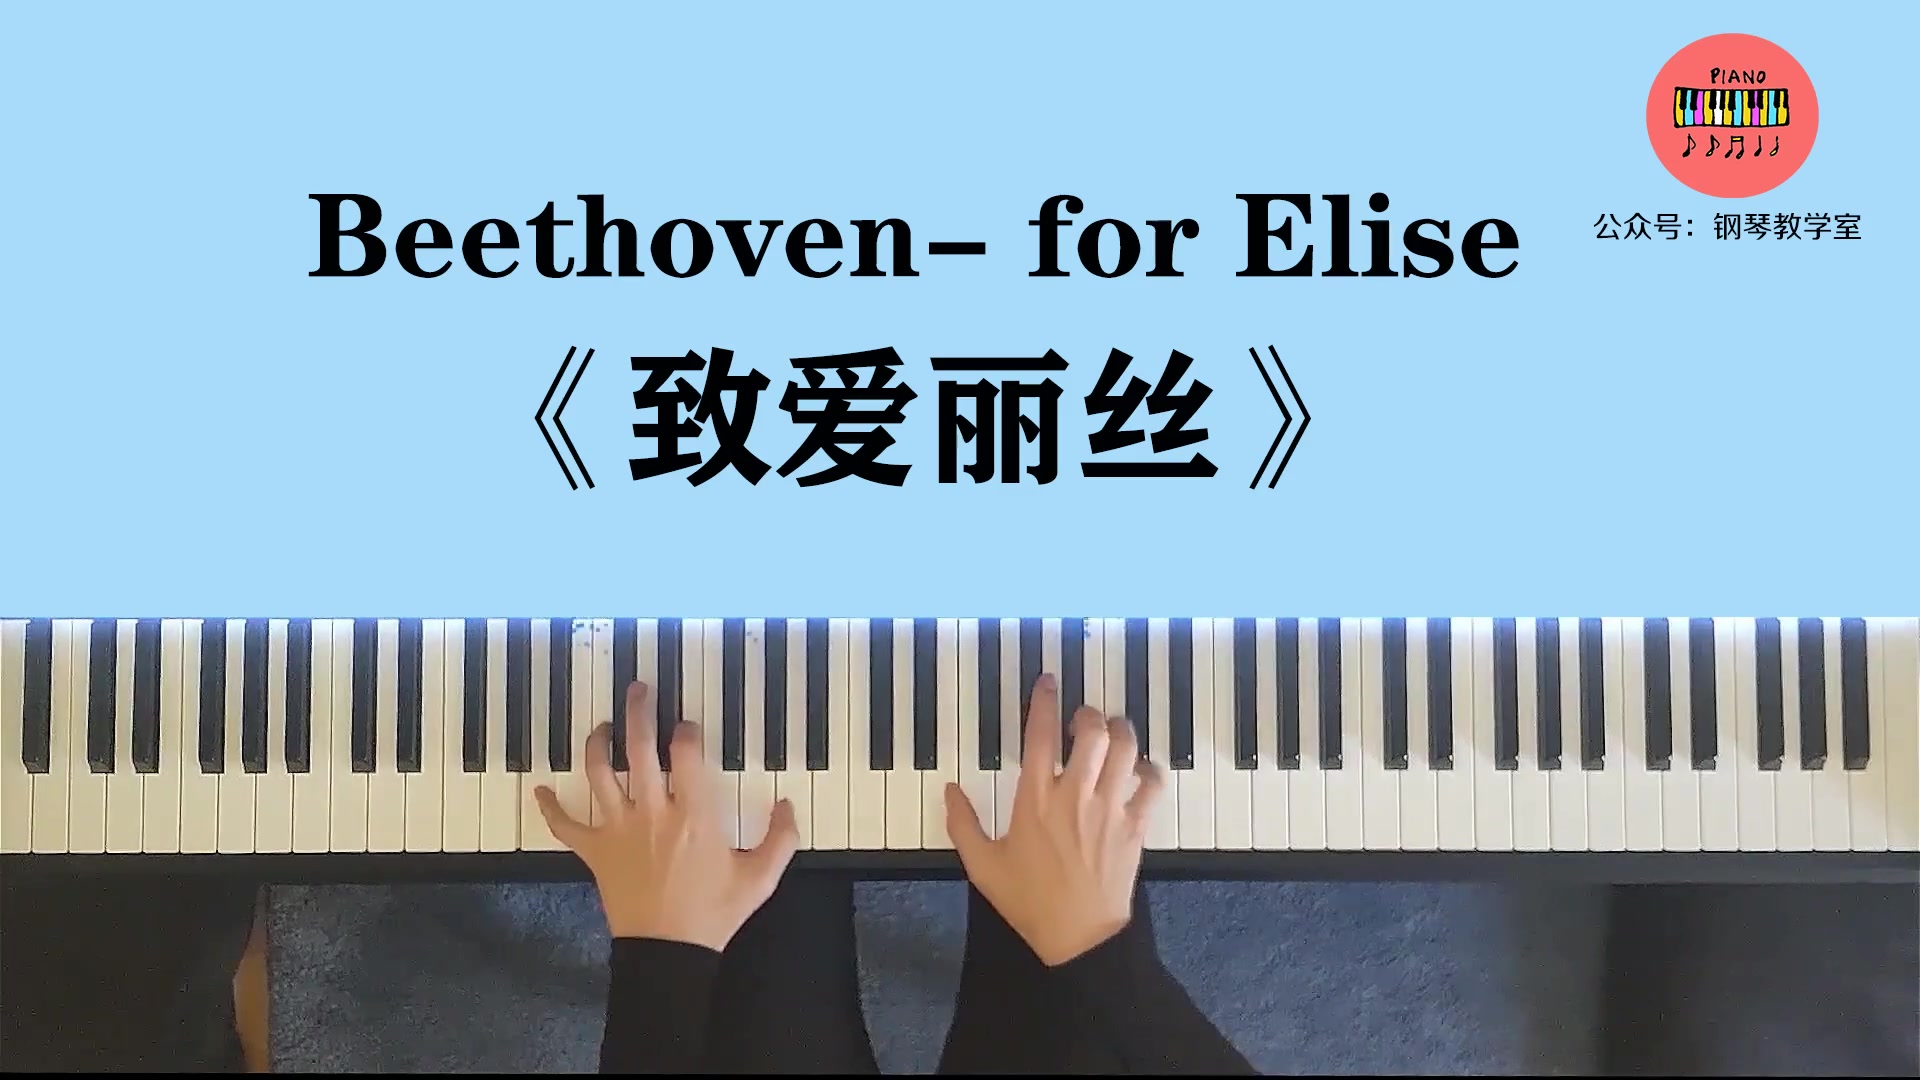 for elise钢琴曲图片